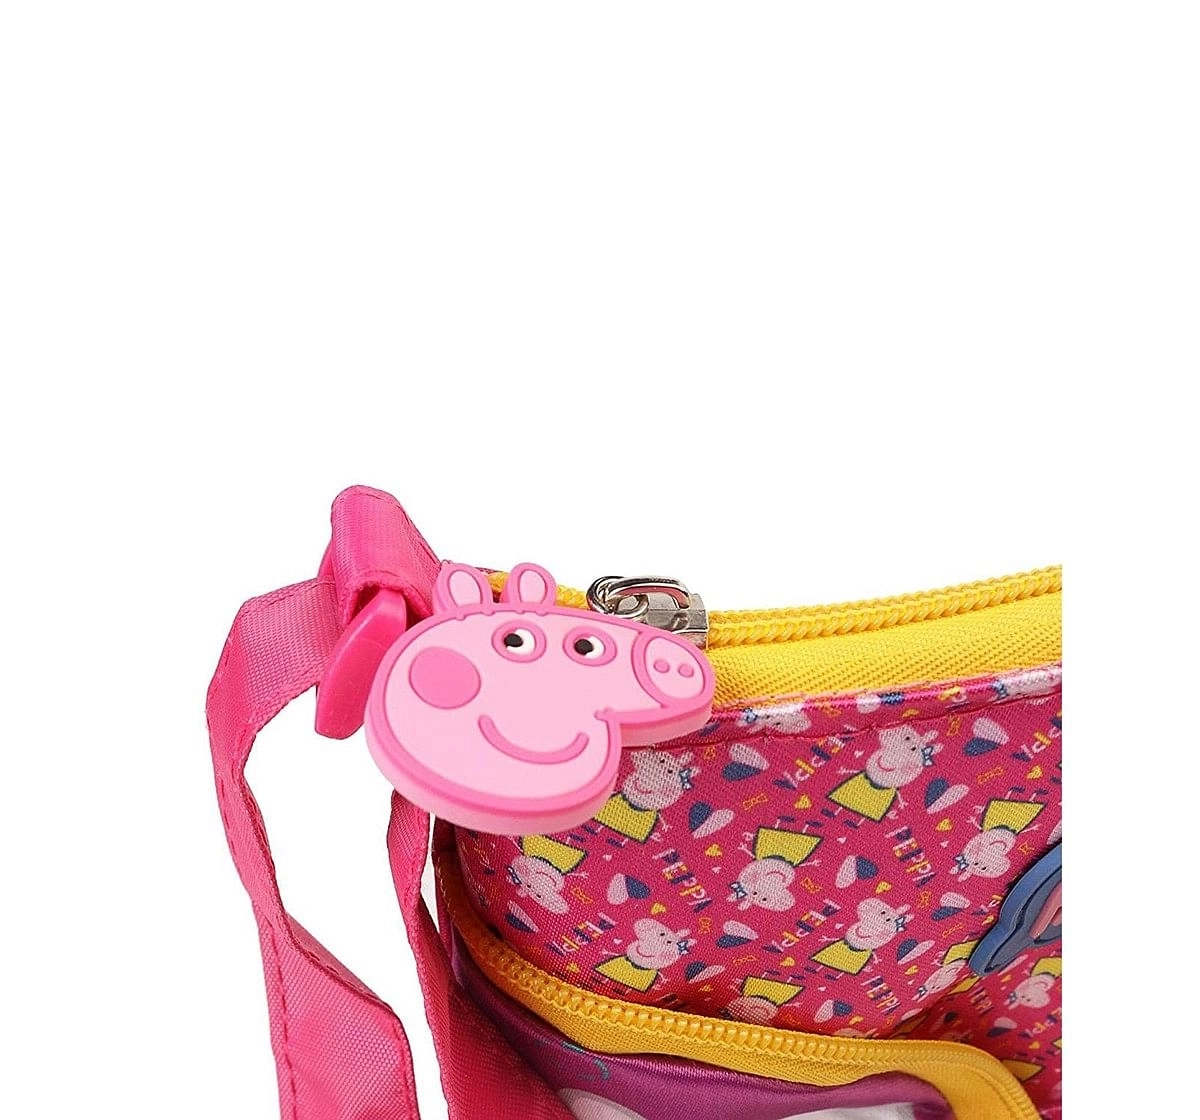 Peppa Pig With Zipper Sling Bag